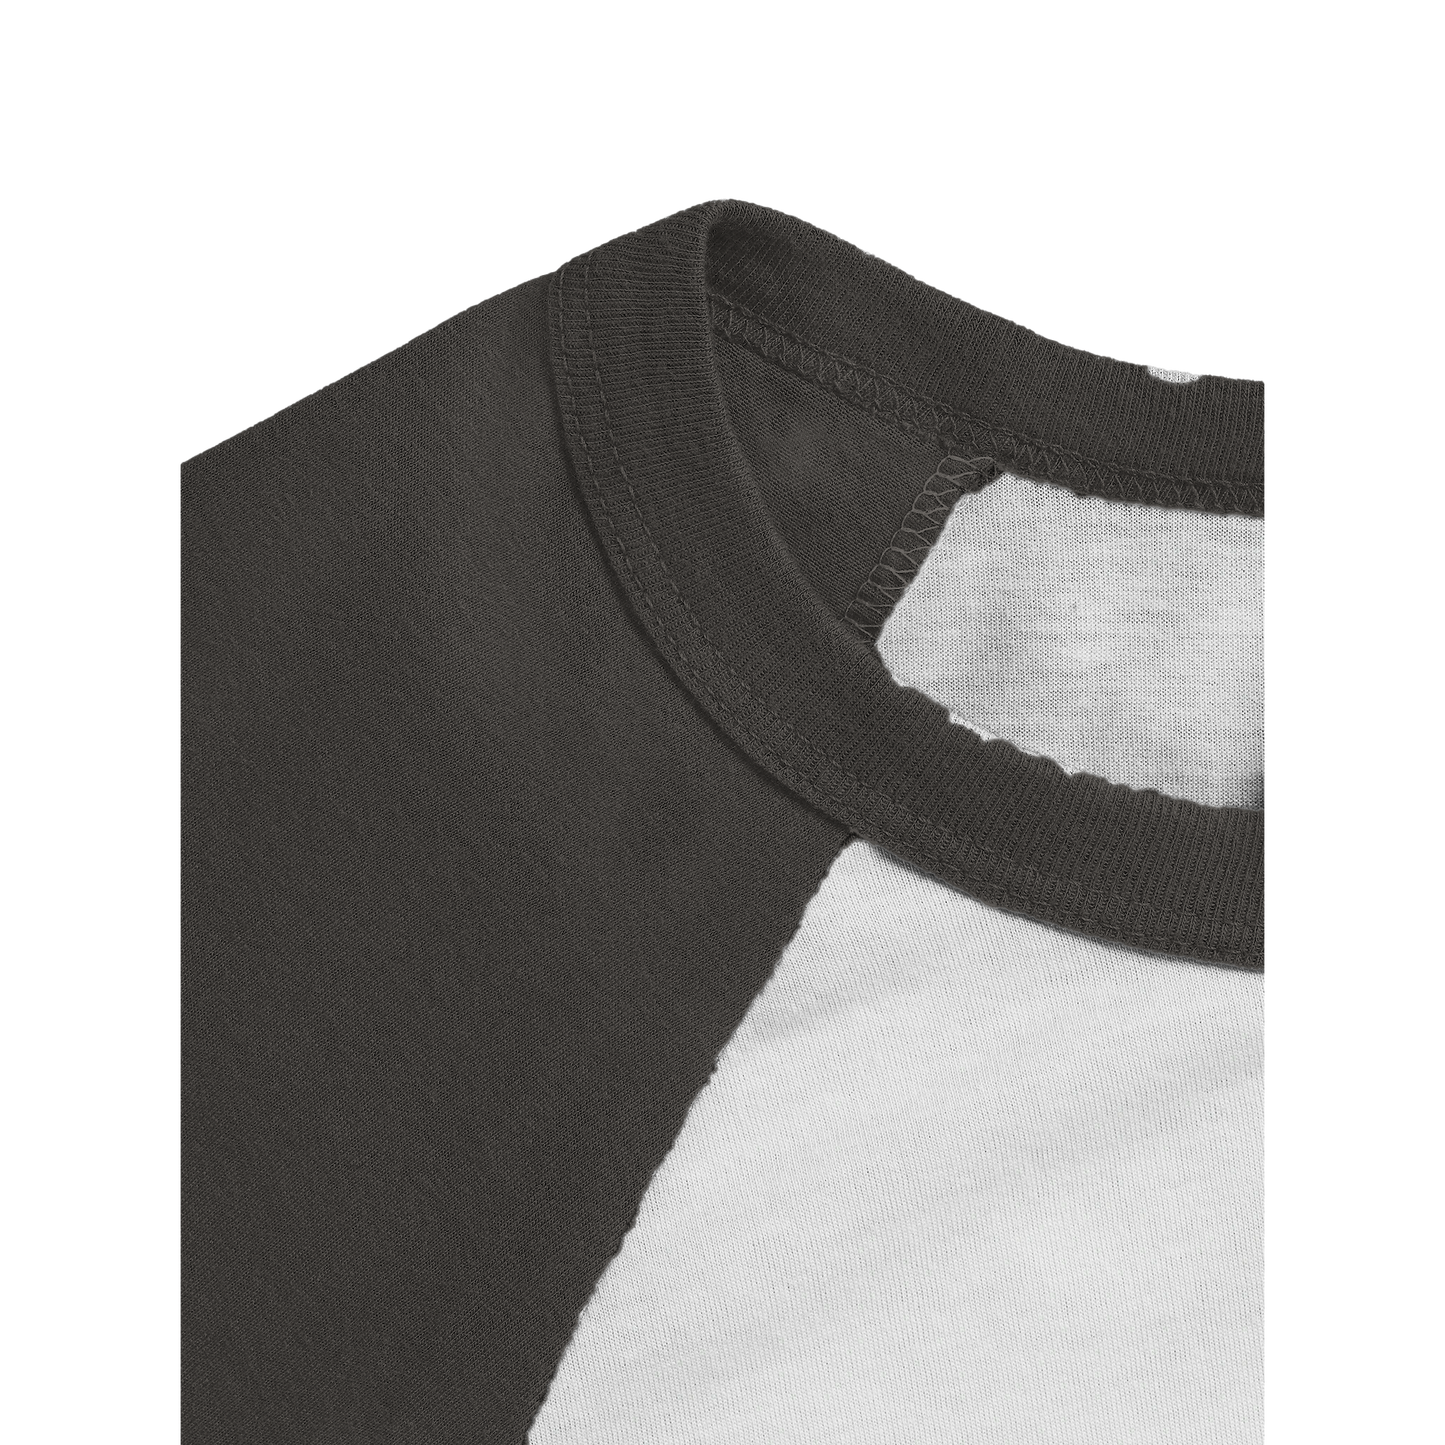 Have A Good Day | Unisex 3/4 sleeve Raglan T-shirt